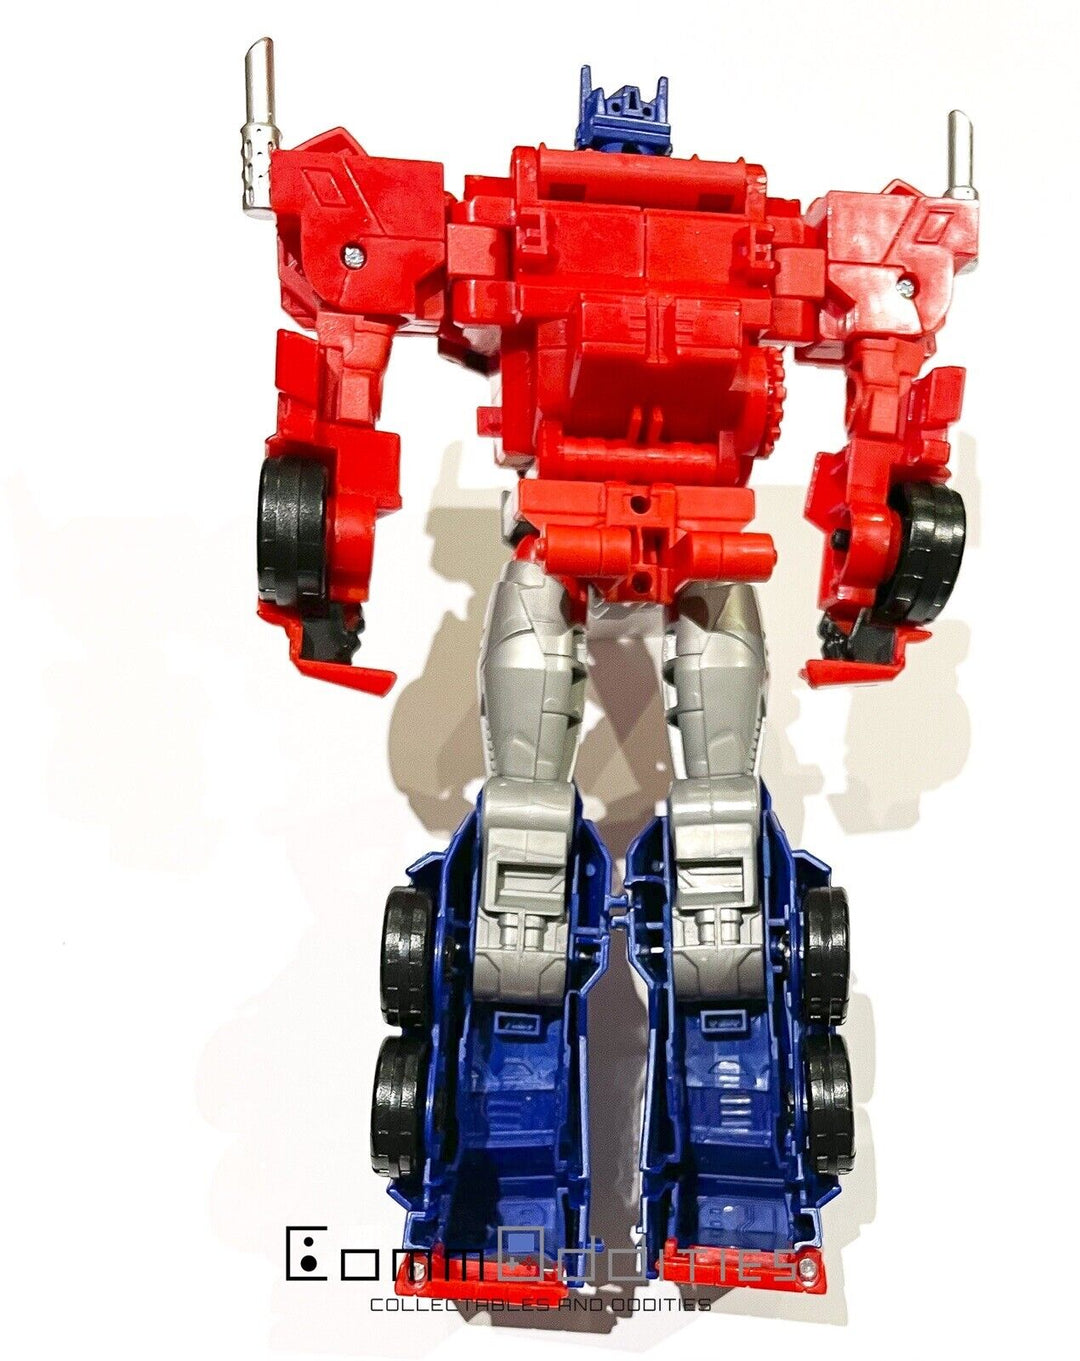 Transformers Optimus Prime - Cyberverse Toy / Figure - FREE POST!